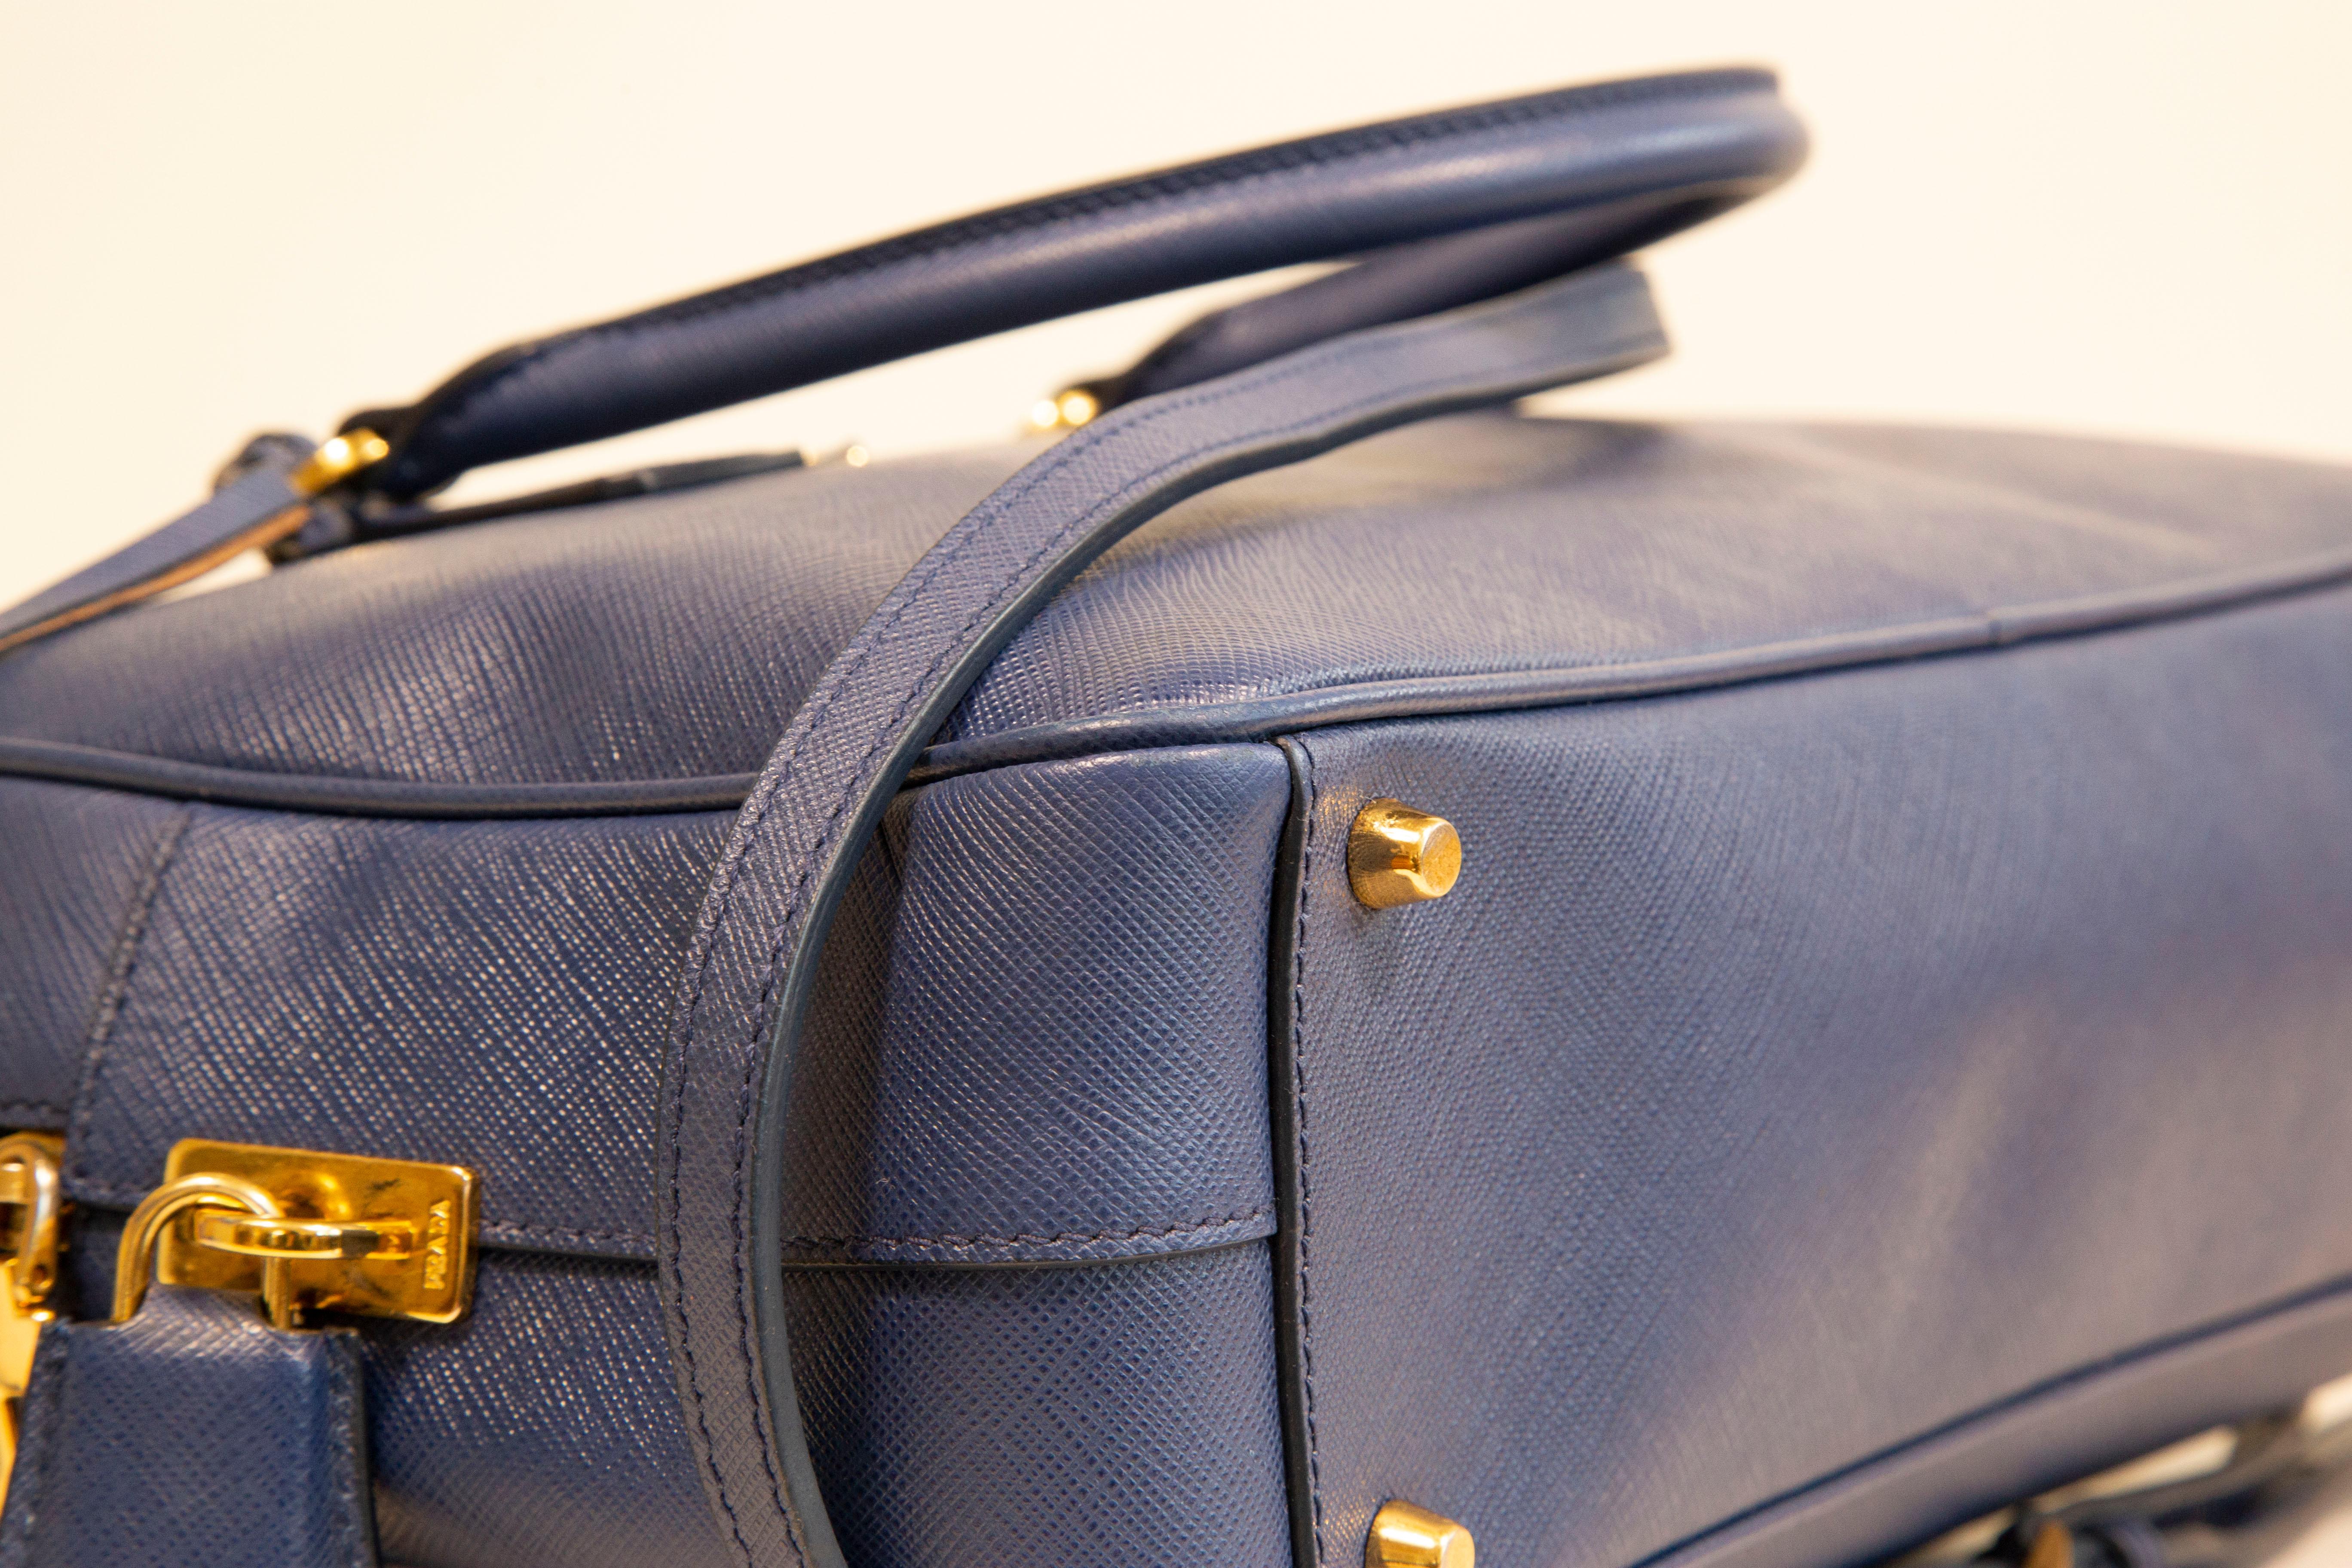  Prada Galleria Two Way Bag in Blue Saffiano Leather 6